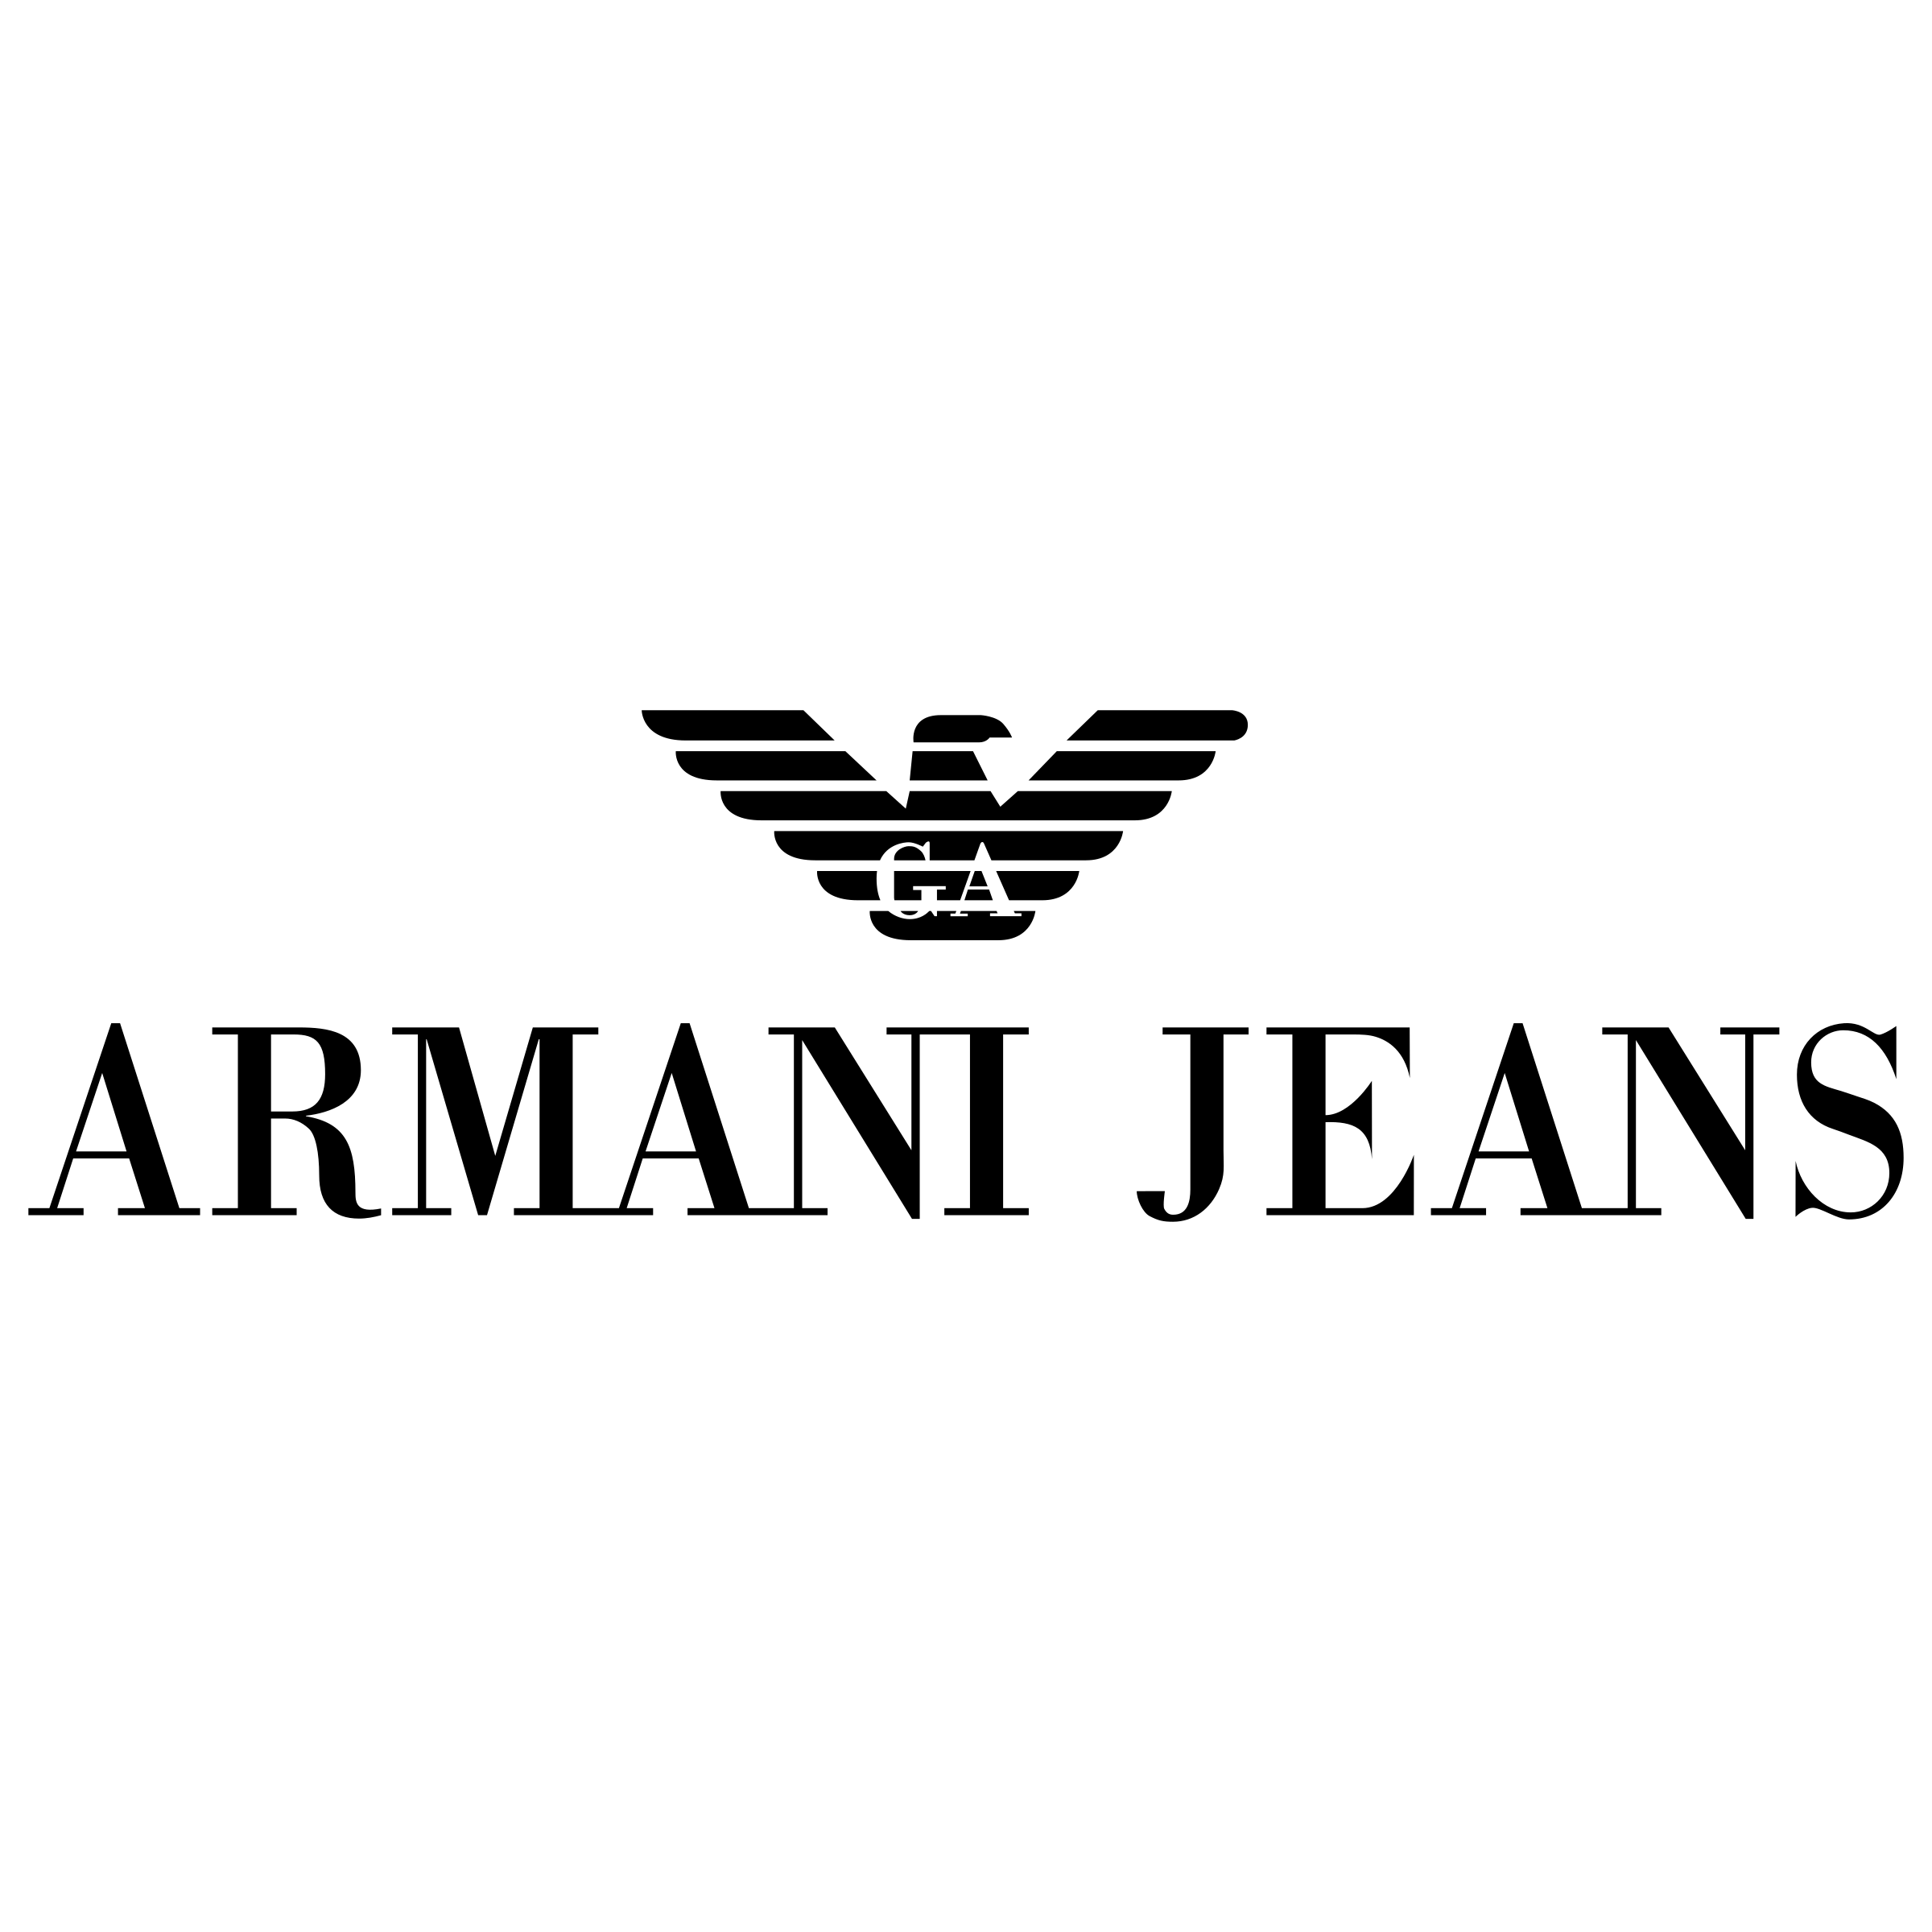 Armani Logo Transparent Images